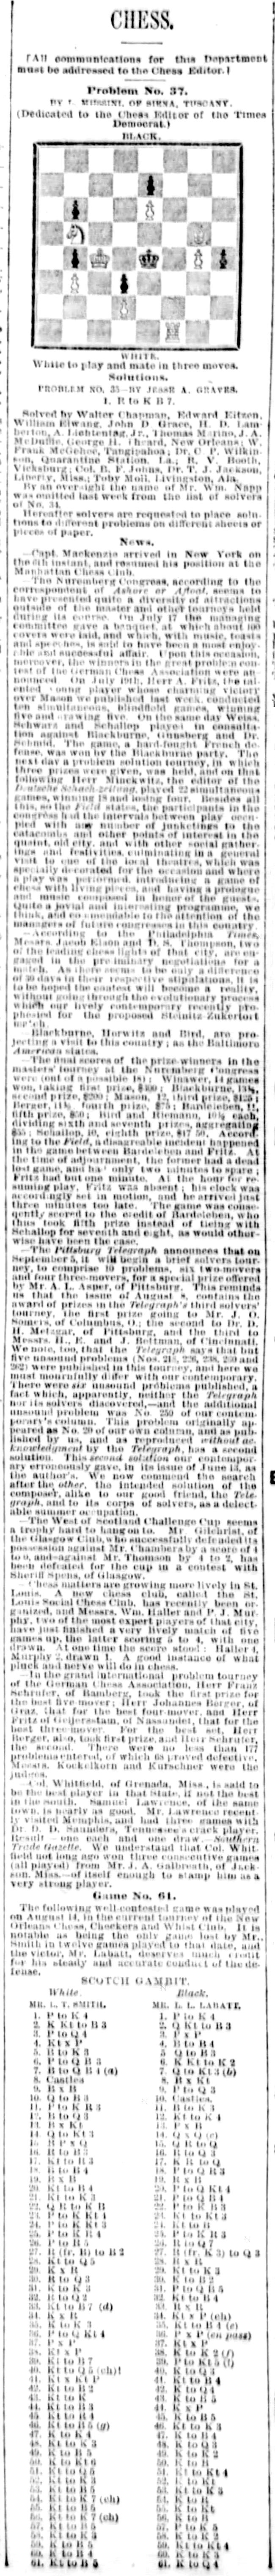 1883.08.19-01 New Orleans Times-Democrat.jpg